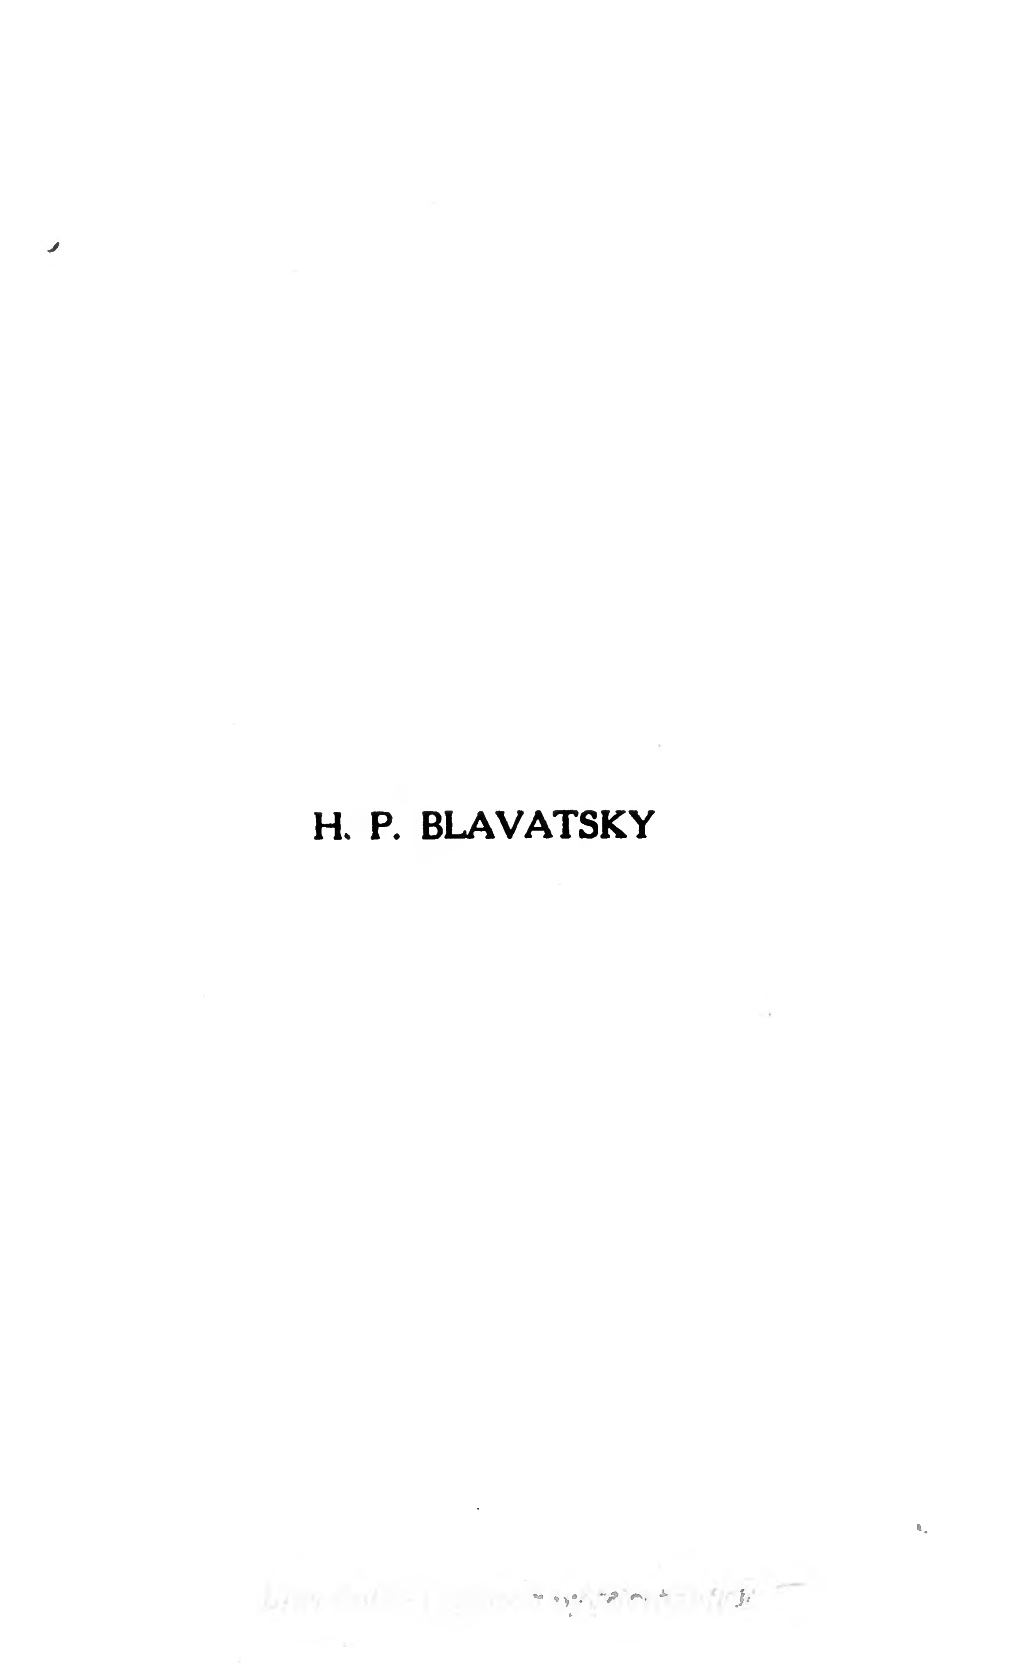 H. P. Blavatsky by the Same Author